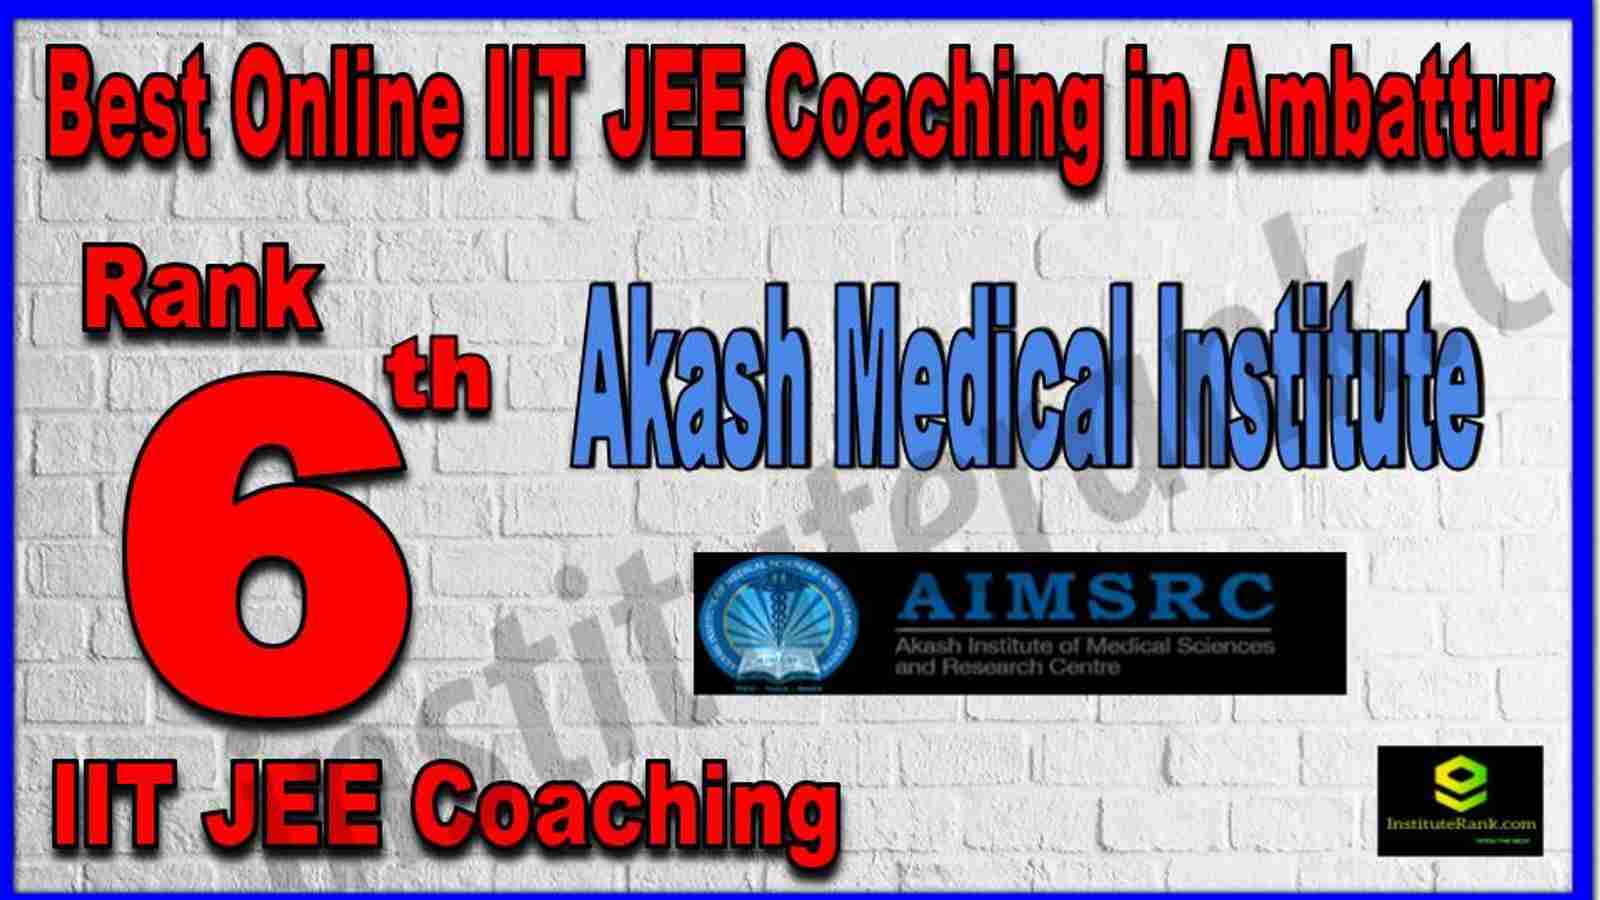 Rank 6th Best Online IIT JEE Coaching in Ambattur